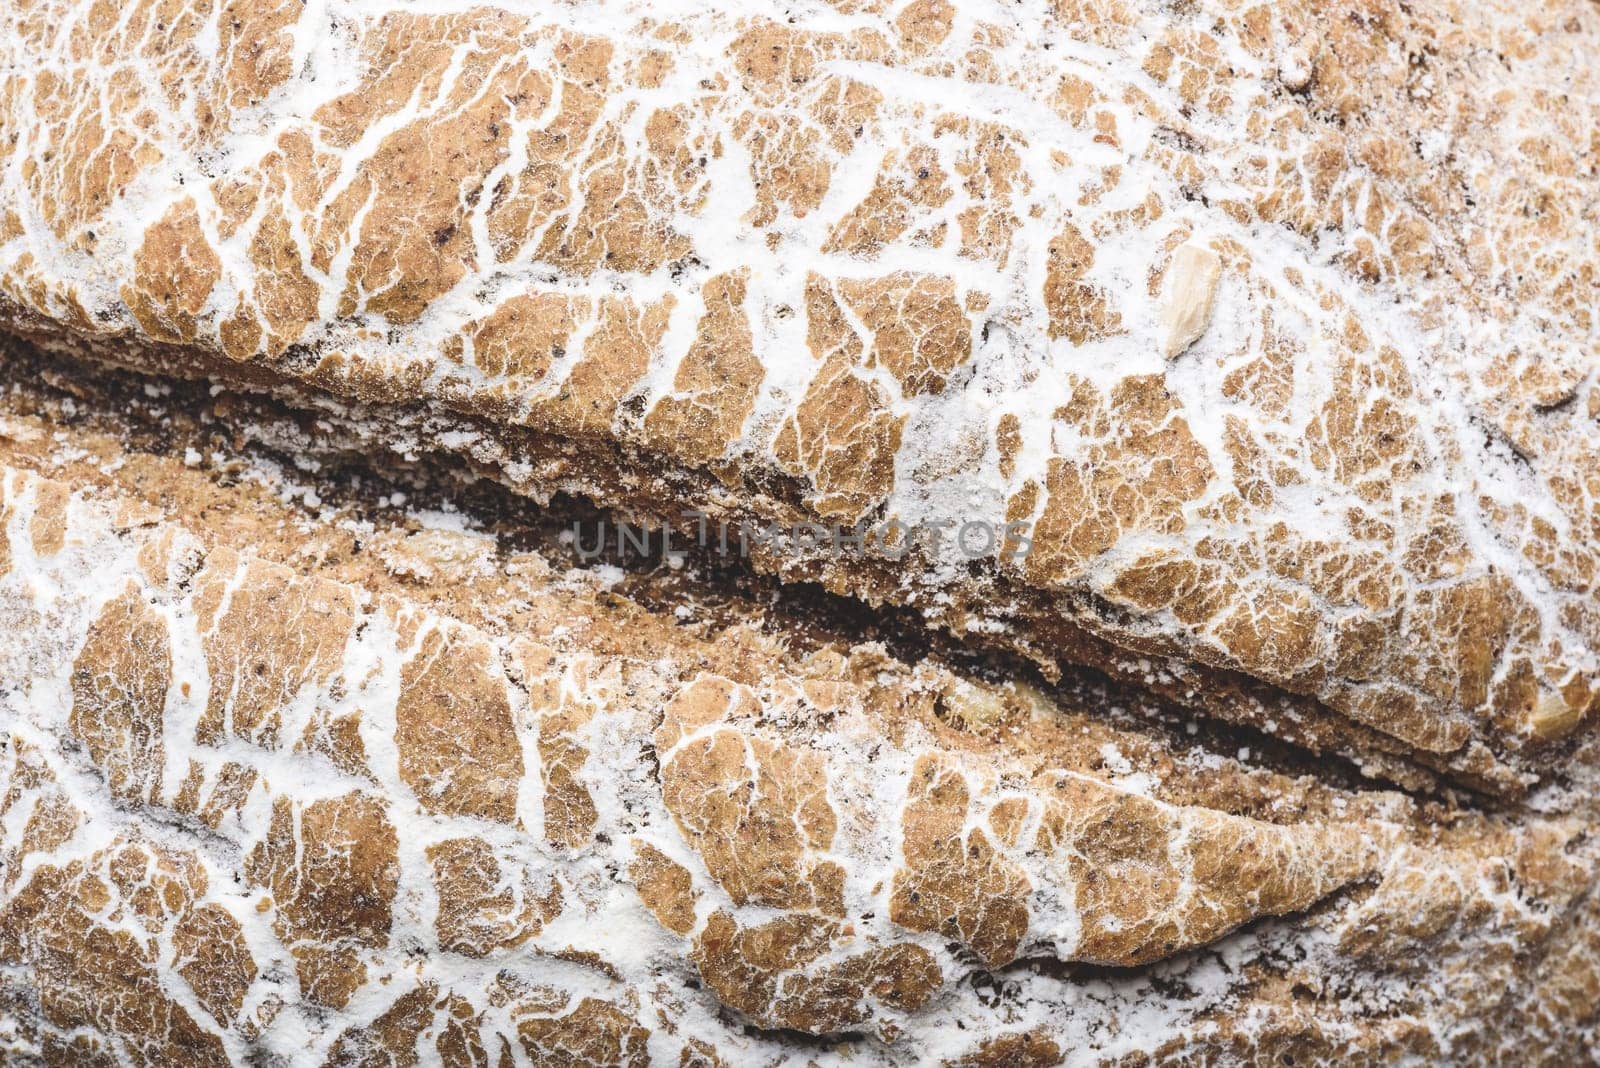 Freshly baked loaf of rye bread by Seva_blsv